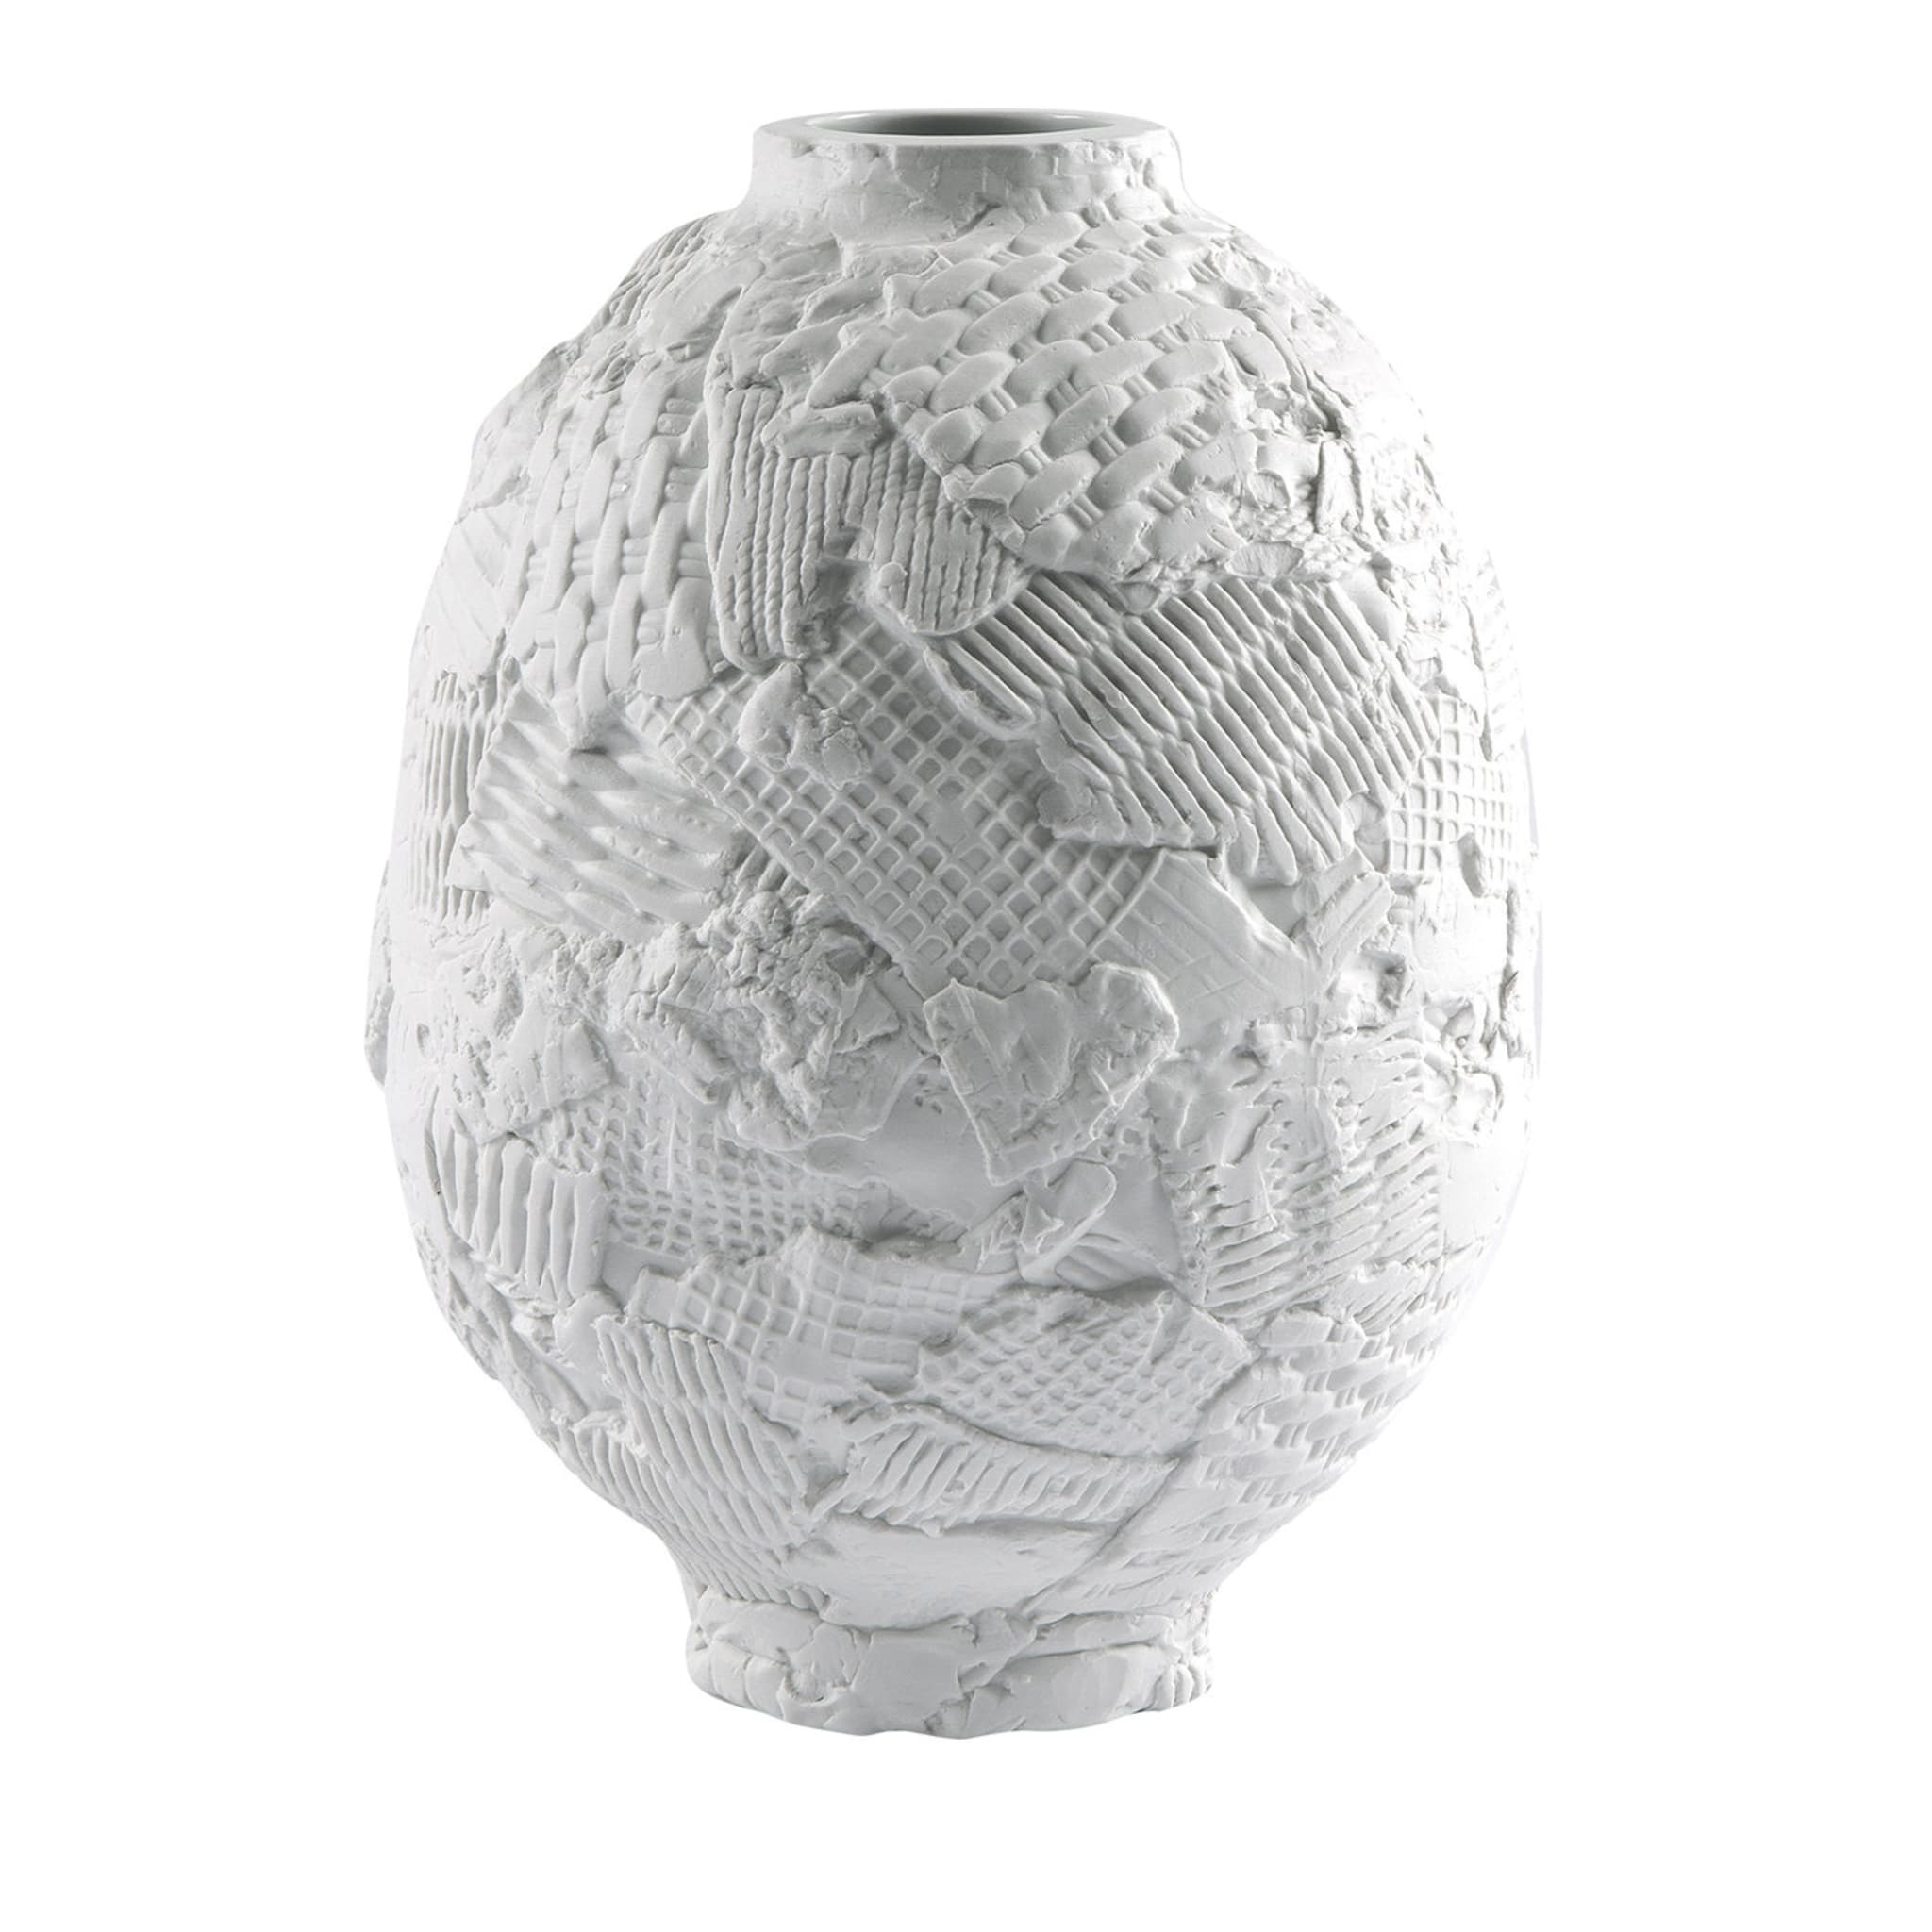 Esker Vase by Pol Polloniato - Main view